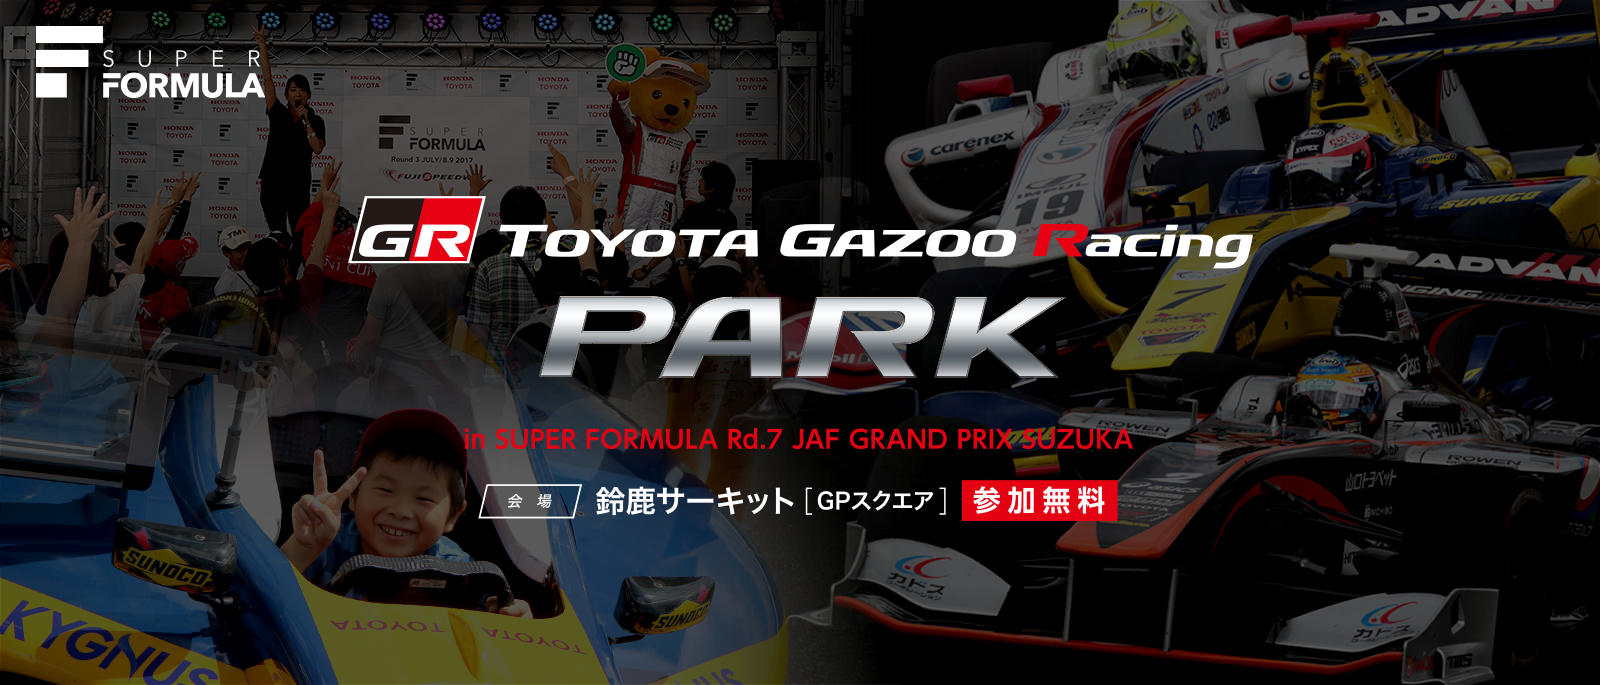 TOYOTA GAZOO Racing PARK（TGRP）in SUPER FOMULA Rd.7 JAF GRAND PRIX SUZUKA